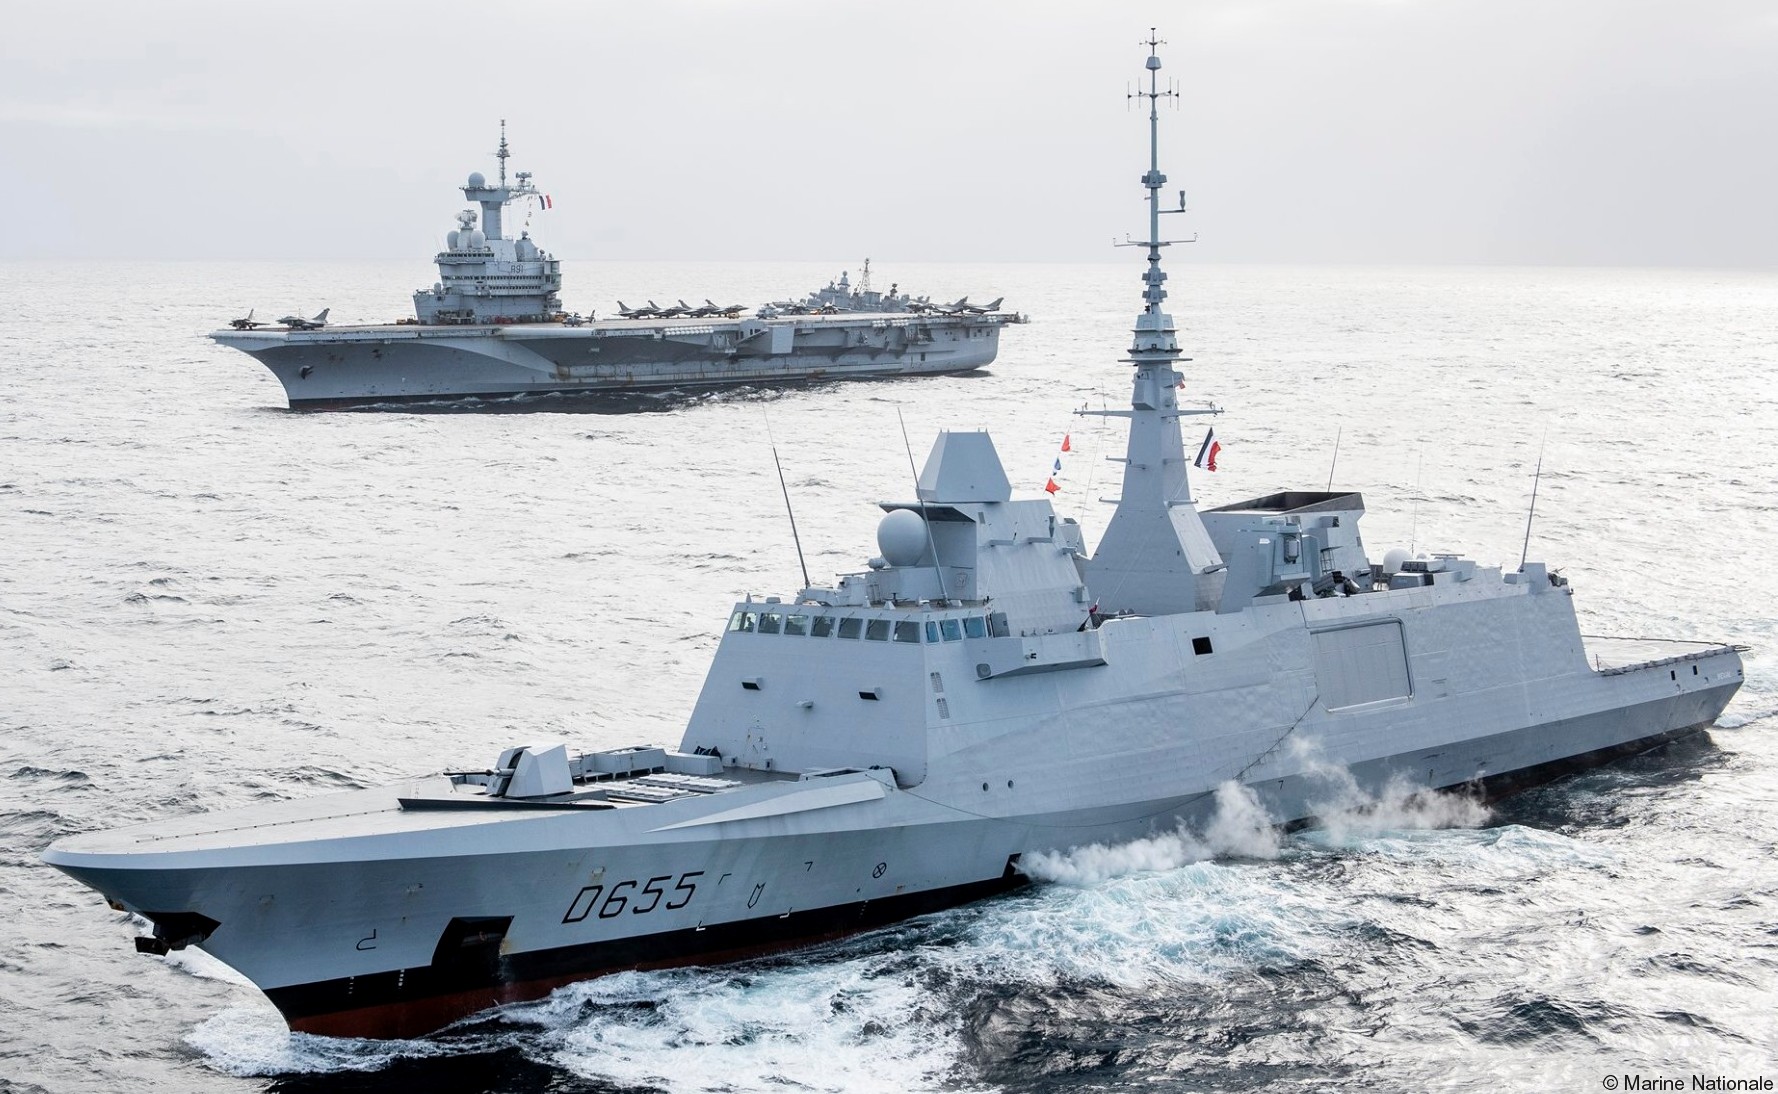 d-655 fs bretagne fremm aquitaine class frigate fregate multi purpose french navy marine nationale 20